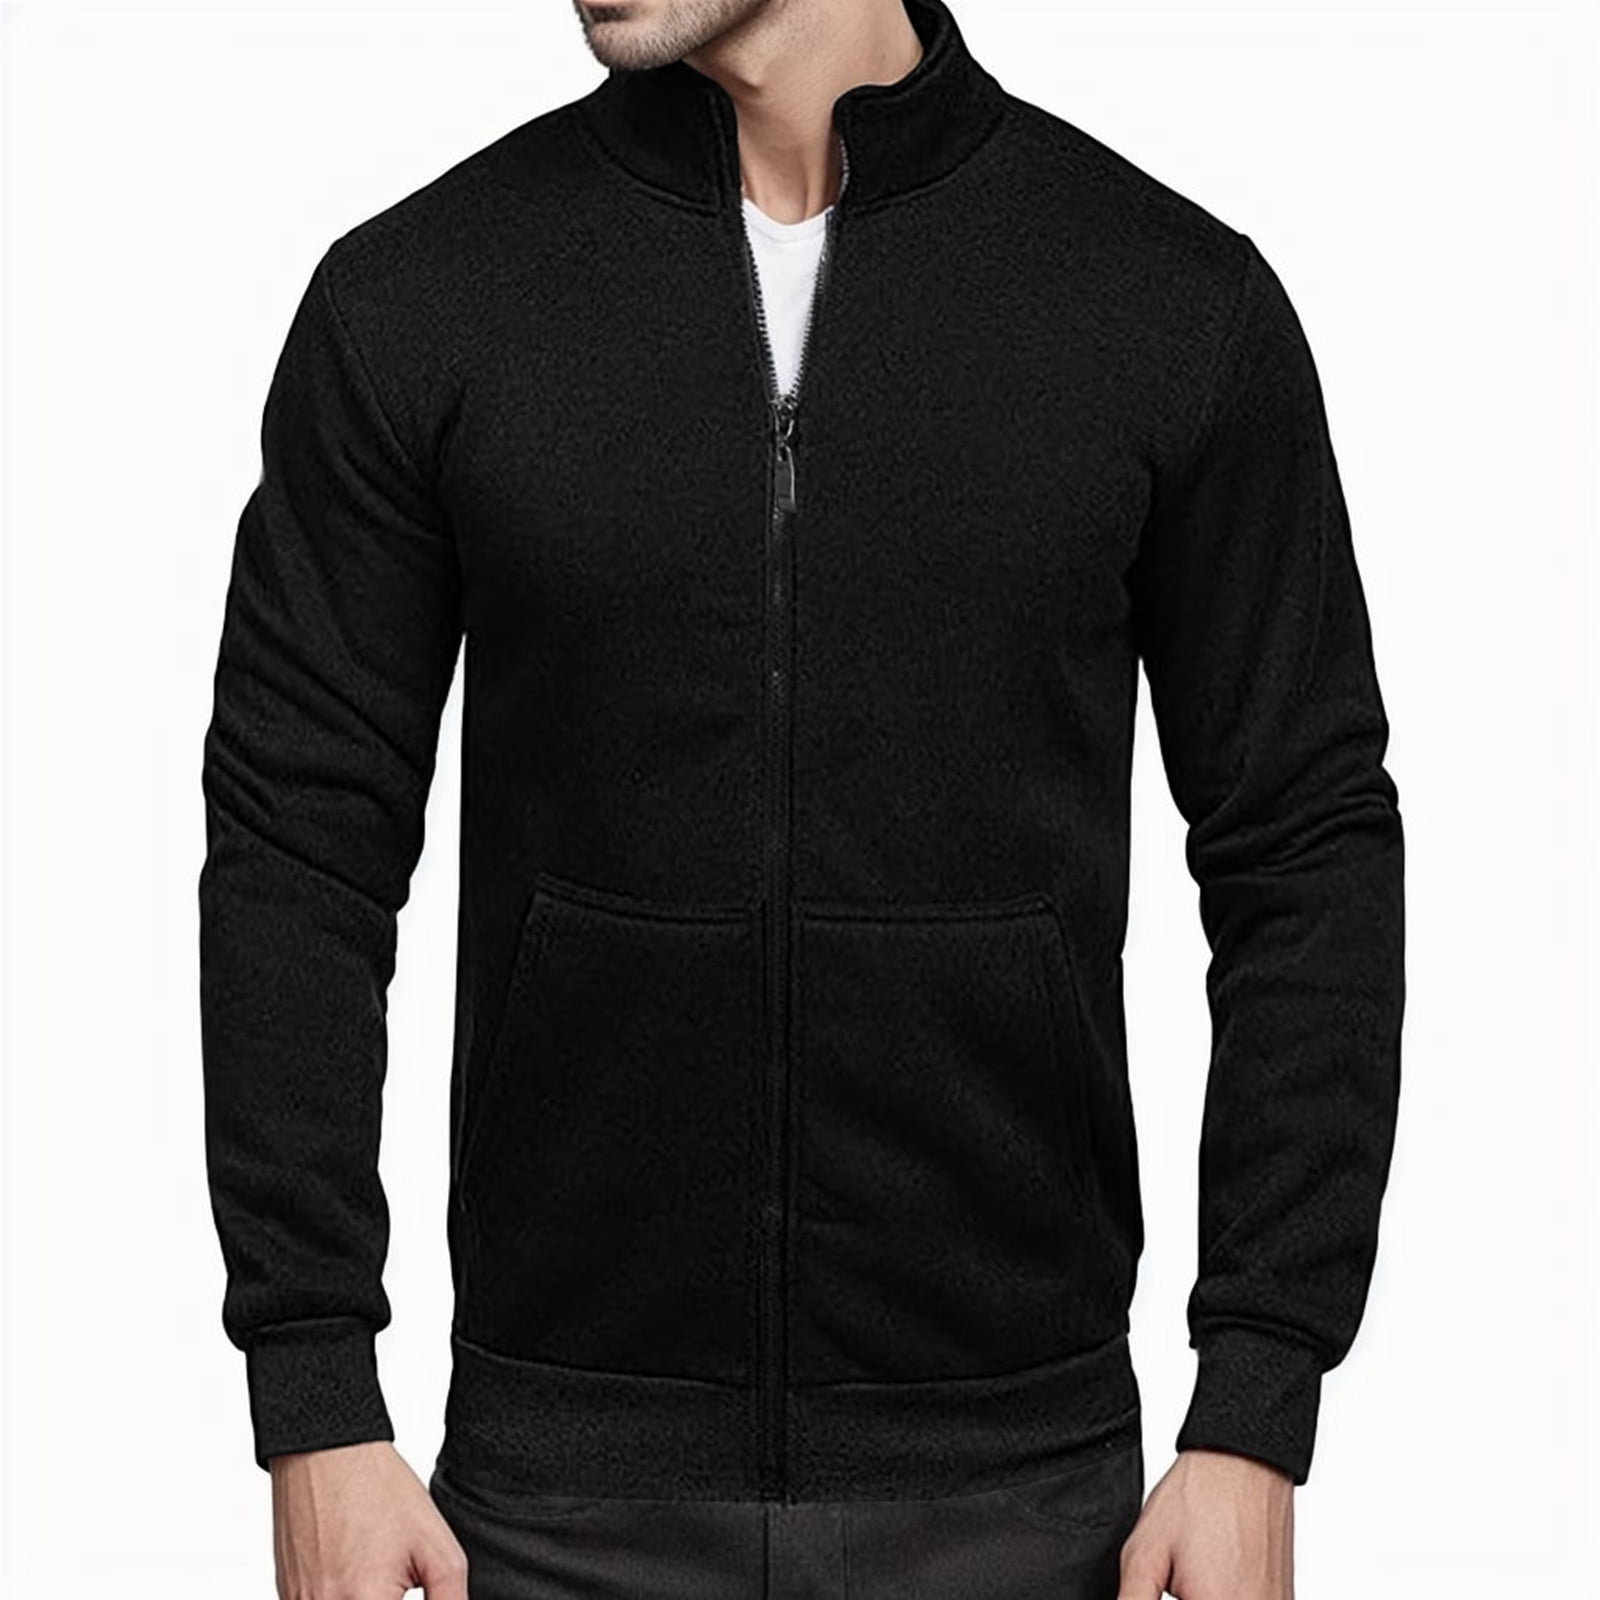 Men Hoodless Sweatshirts Solid Color Long Sleeve Clothes Cardigan Zip ...